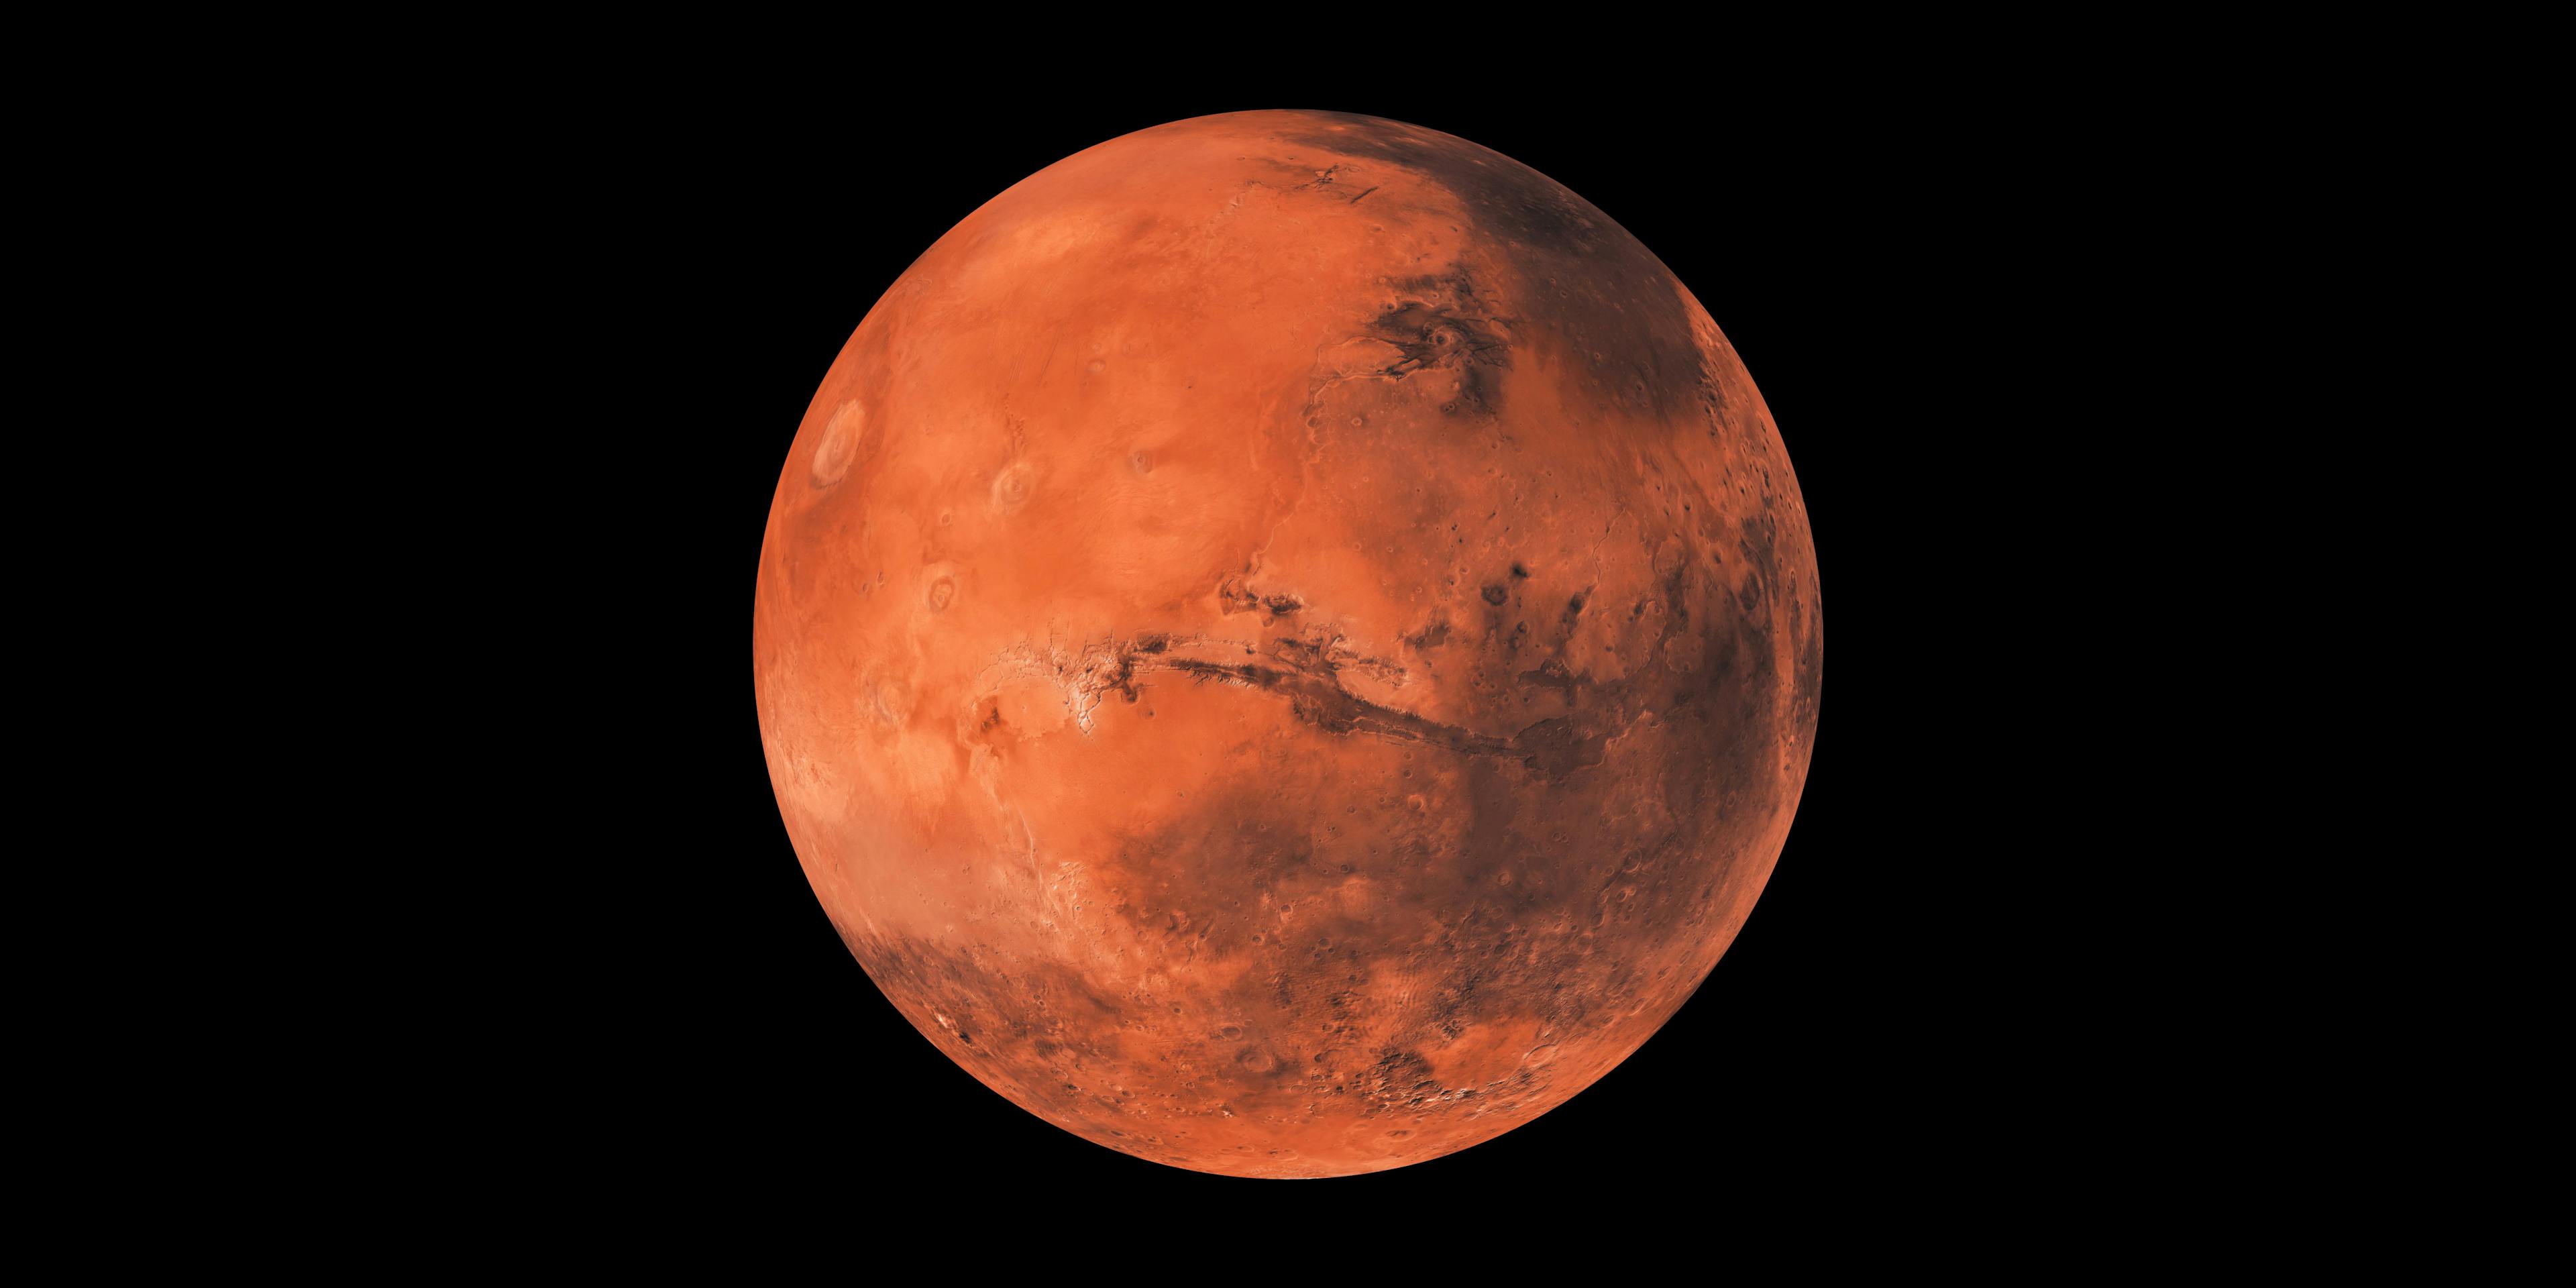 Mars red planet black background | Image Credit: © Martin - stock.adobe.com